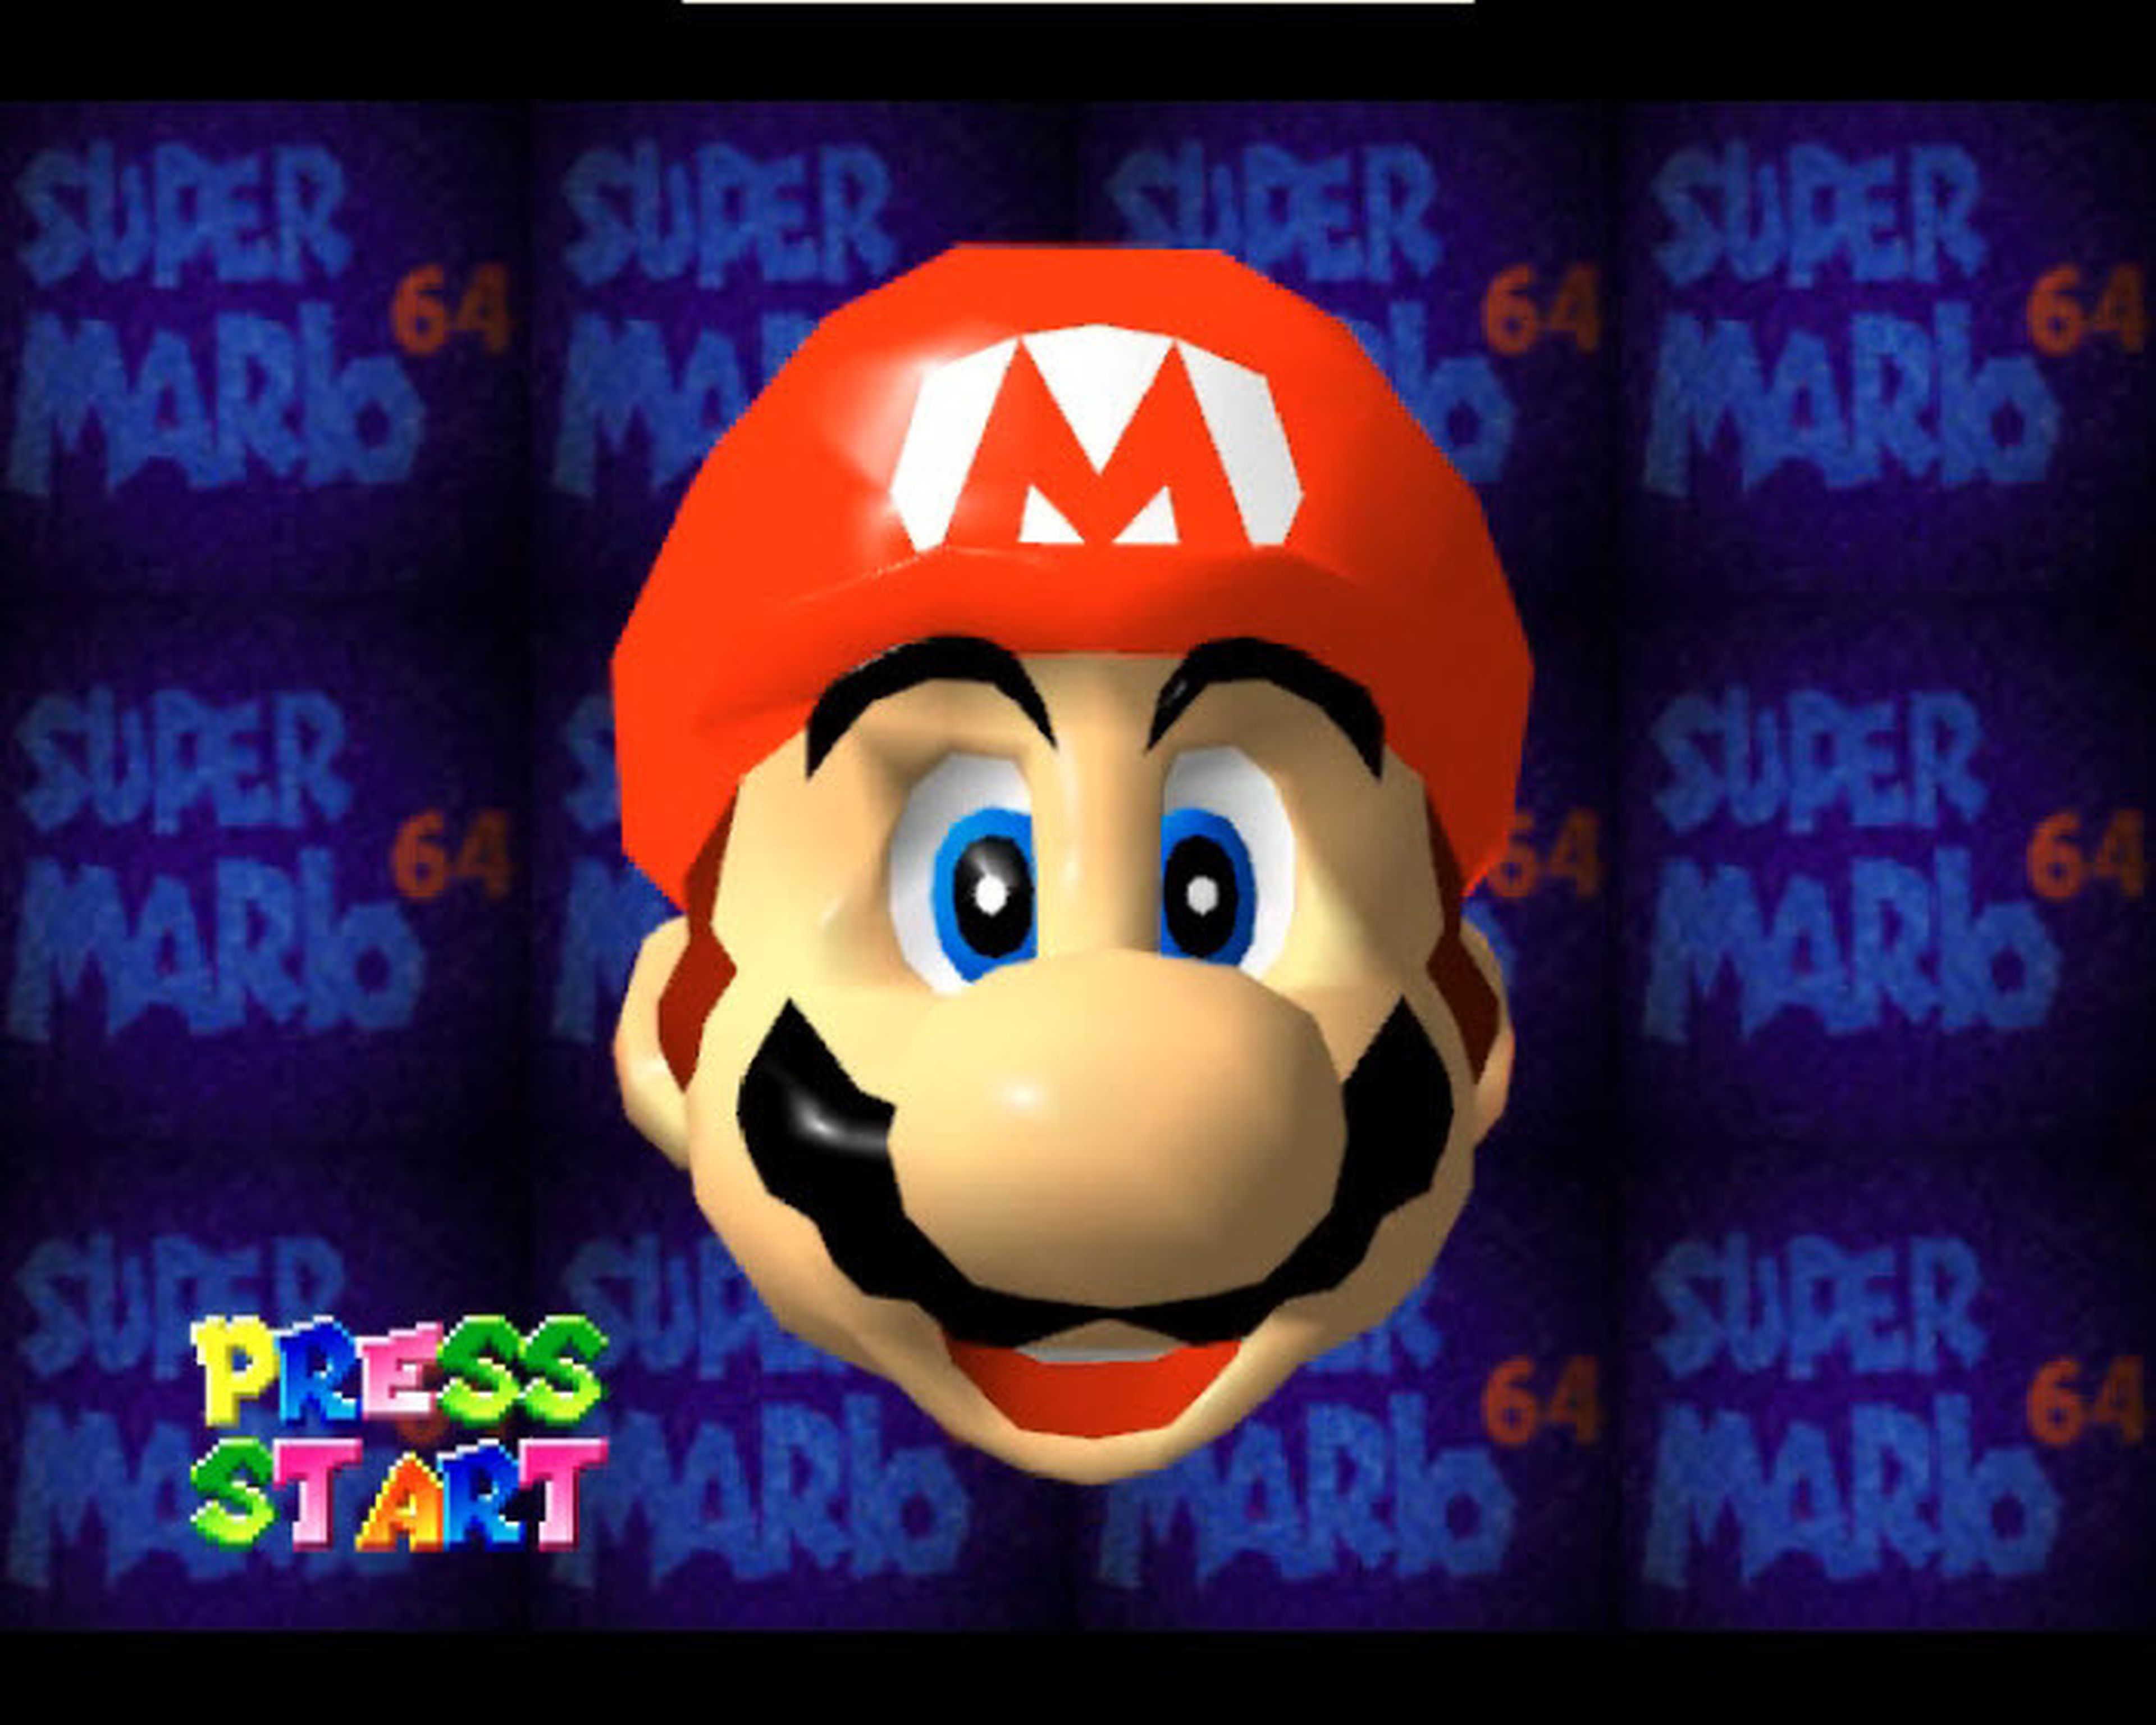 Nintendo 64 mario. Супер Марио Нинтендо 64. Super Mario Nintendo 64. Super Mario 64 n64. Super Mario 64 Nintendo 64.